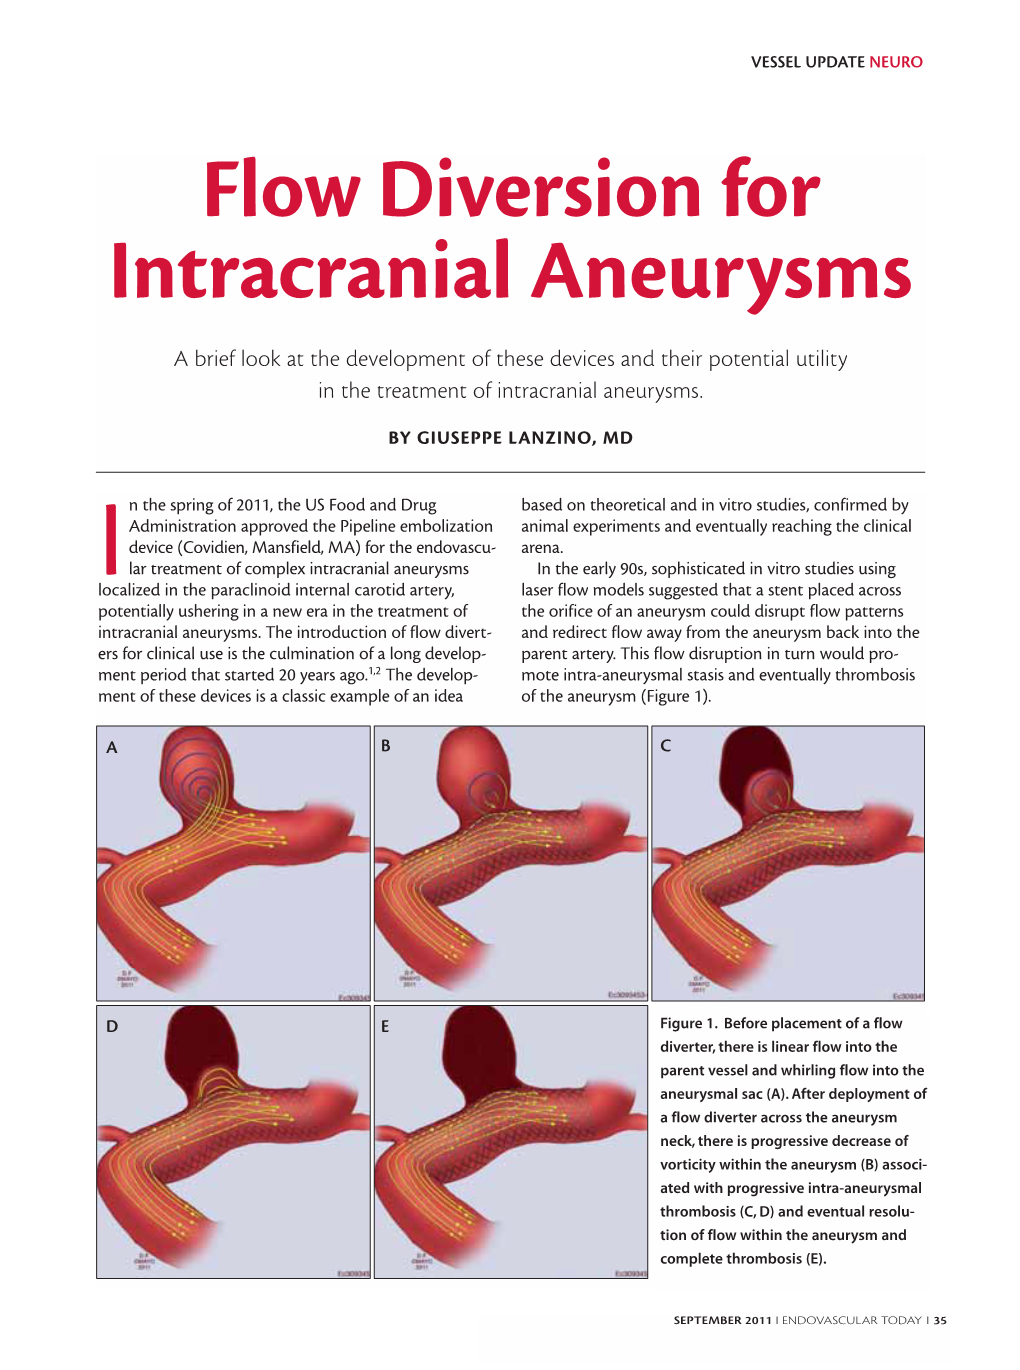 Flow Diversion for Intracranial Aneurysms